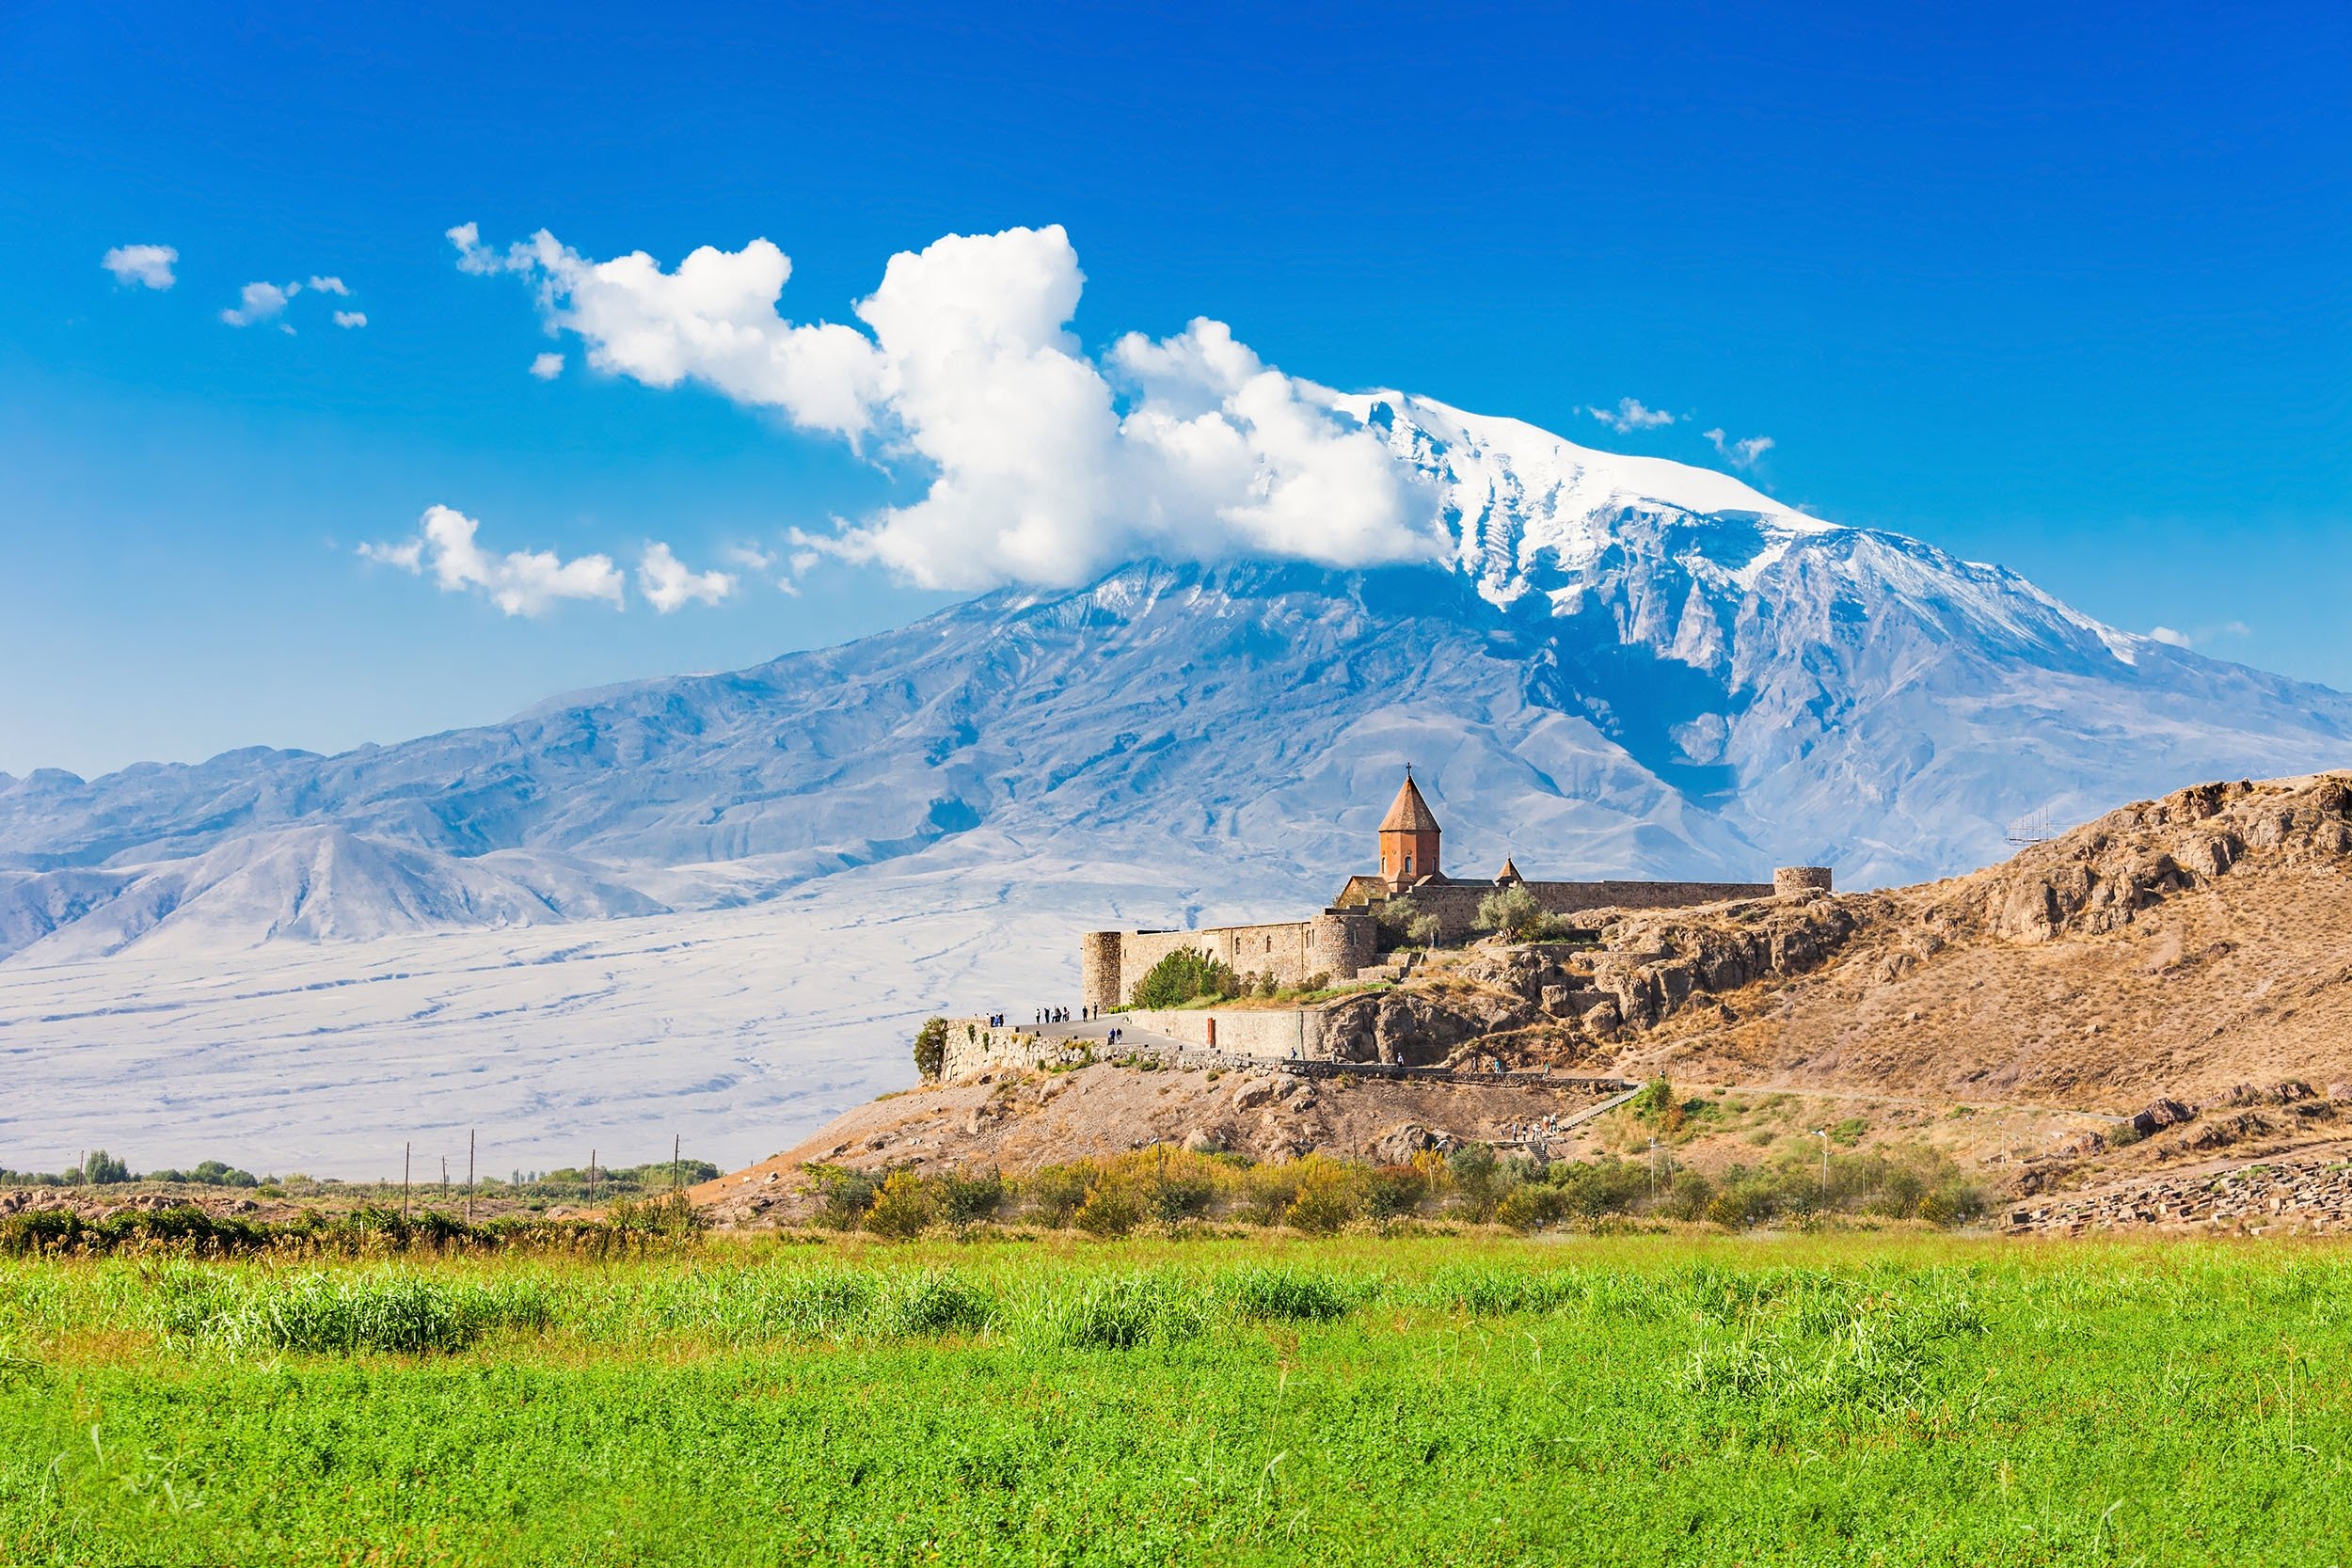 Armenian Monastery Khor Virap with Mount Ararat in the background, in the Ararat plain, Armenia. (Shutterstock Photo)